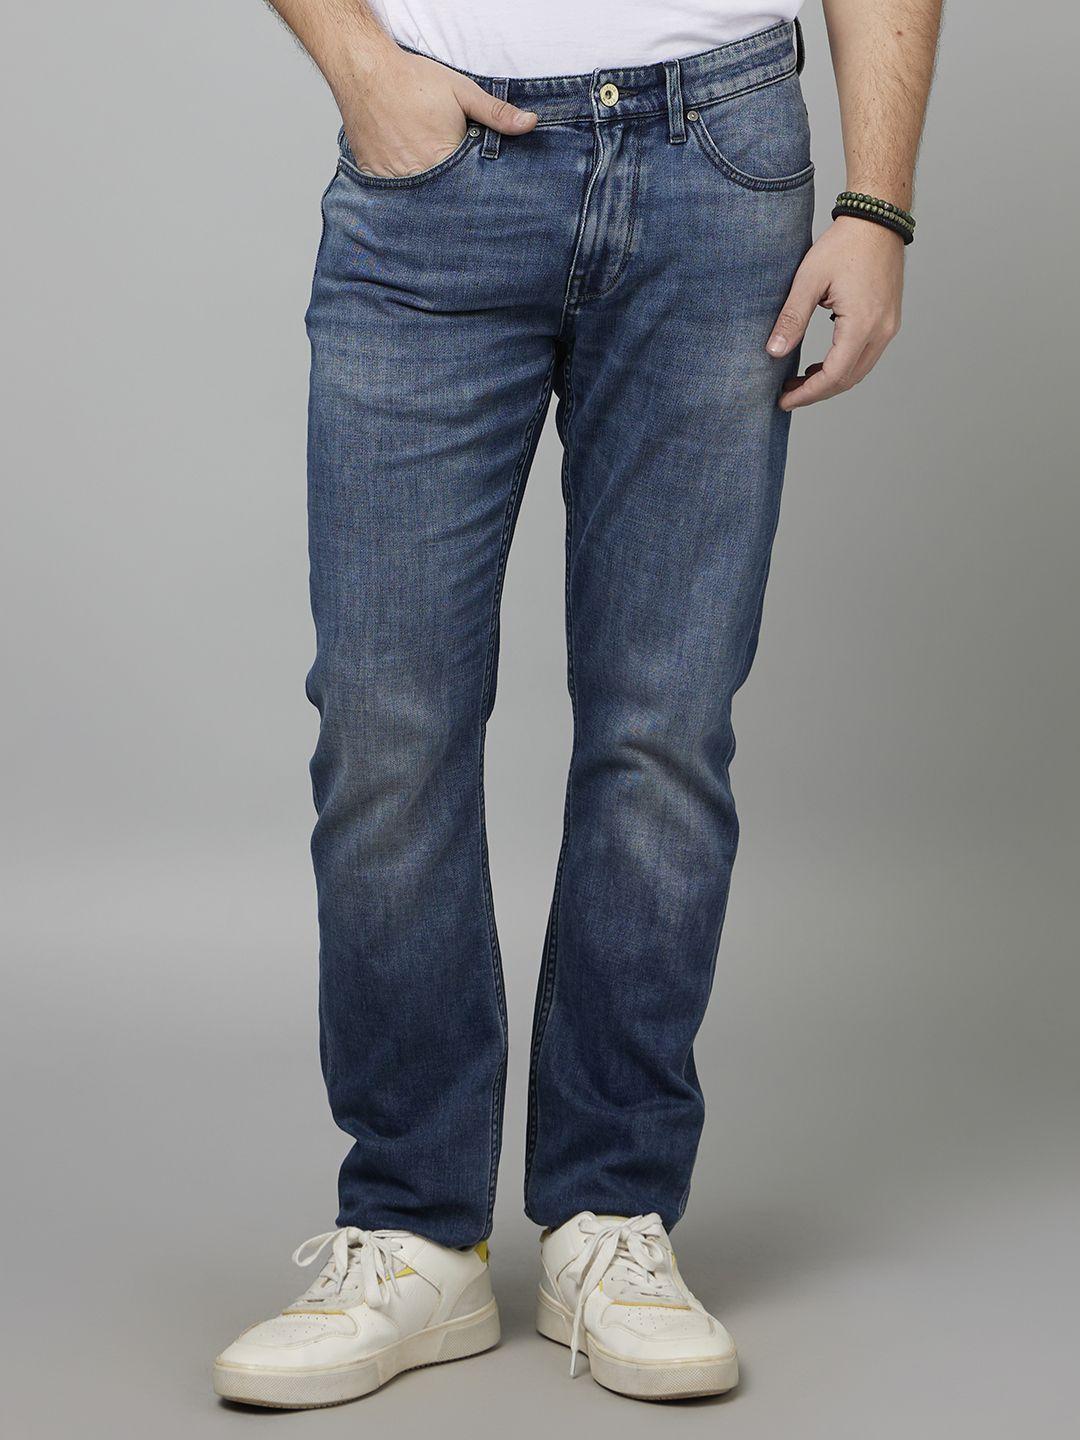 celio men jean slim fit clean look light fade clean look stretchable jeans